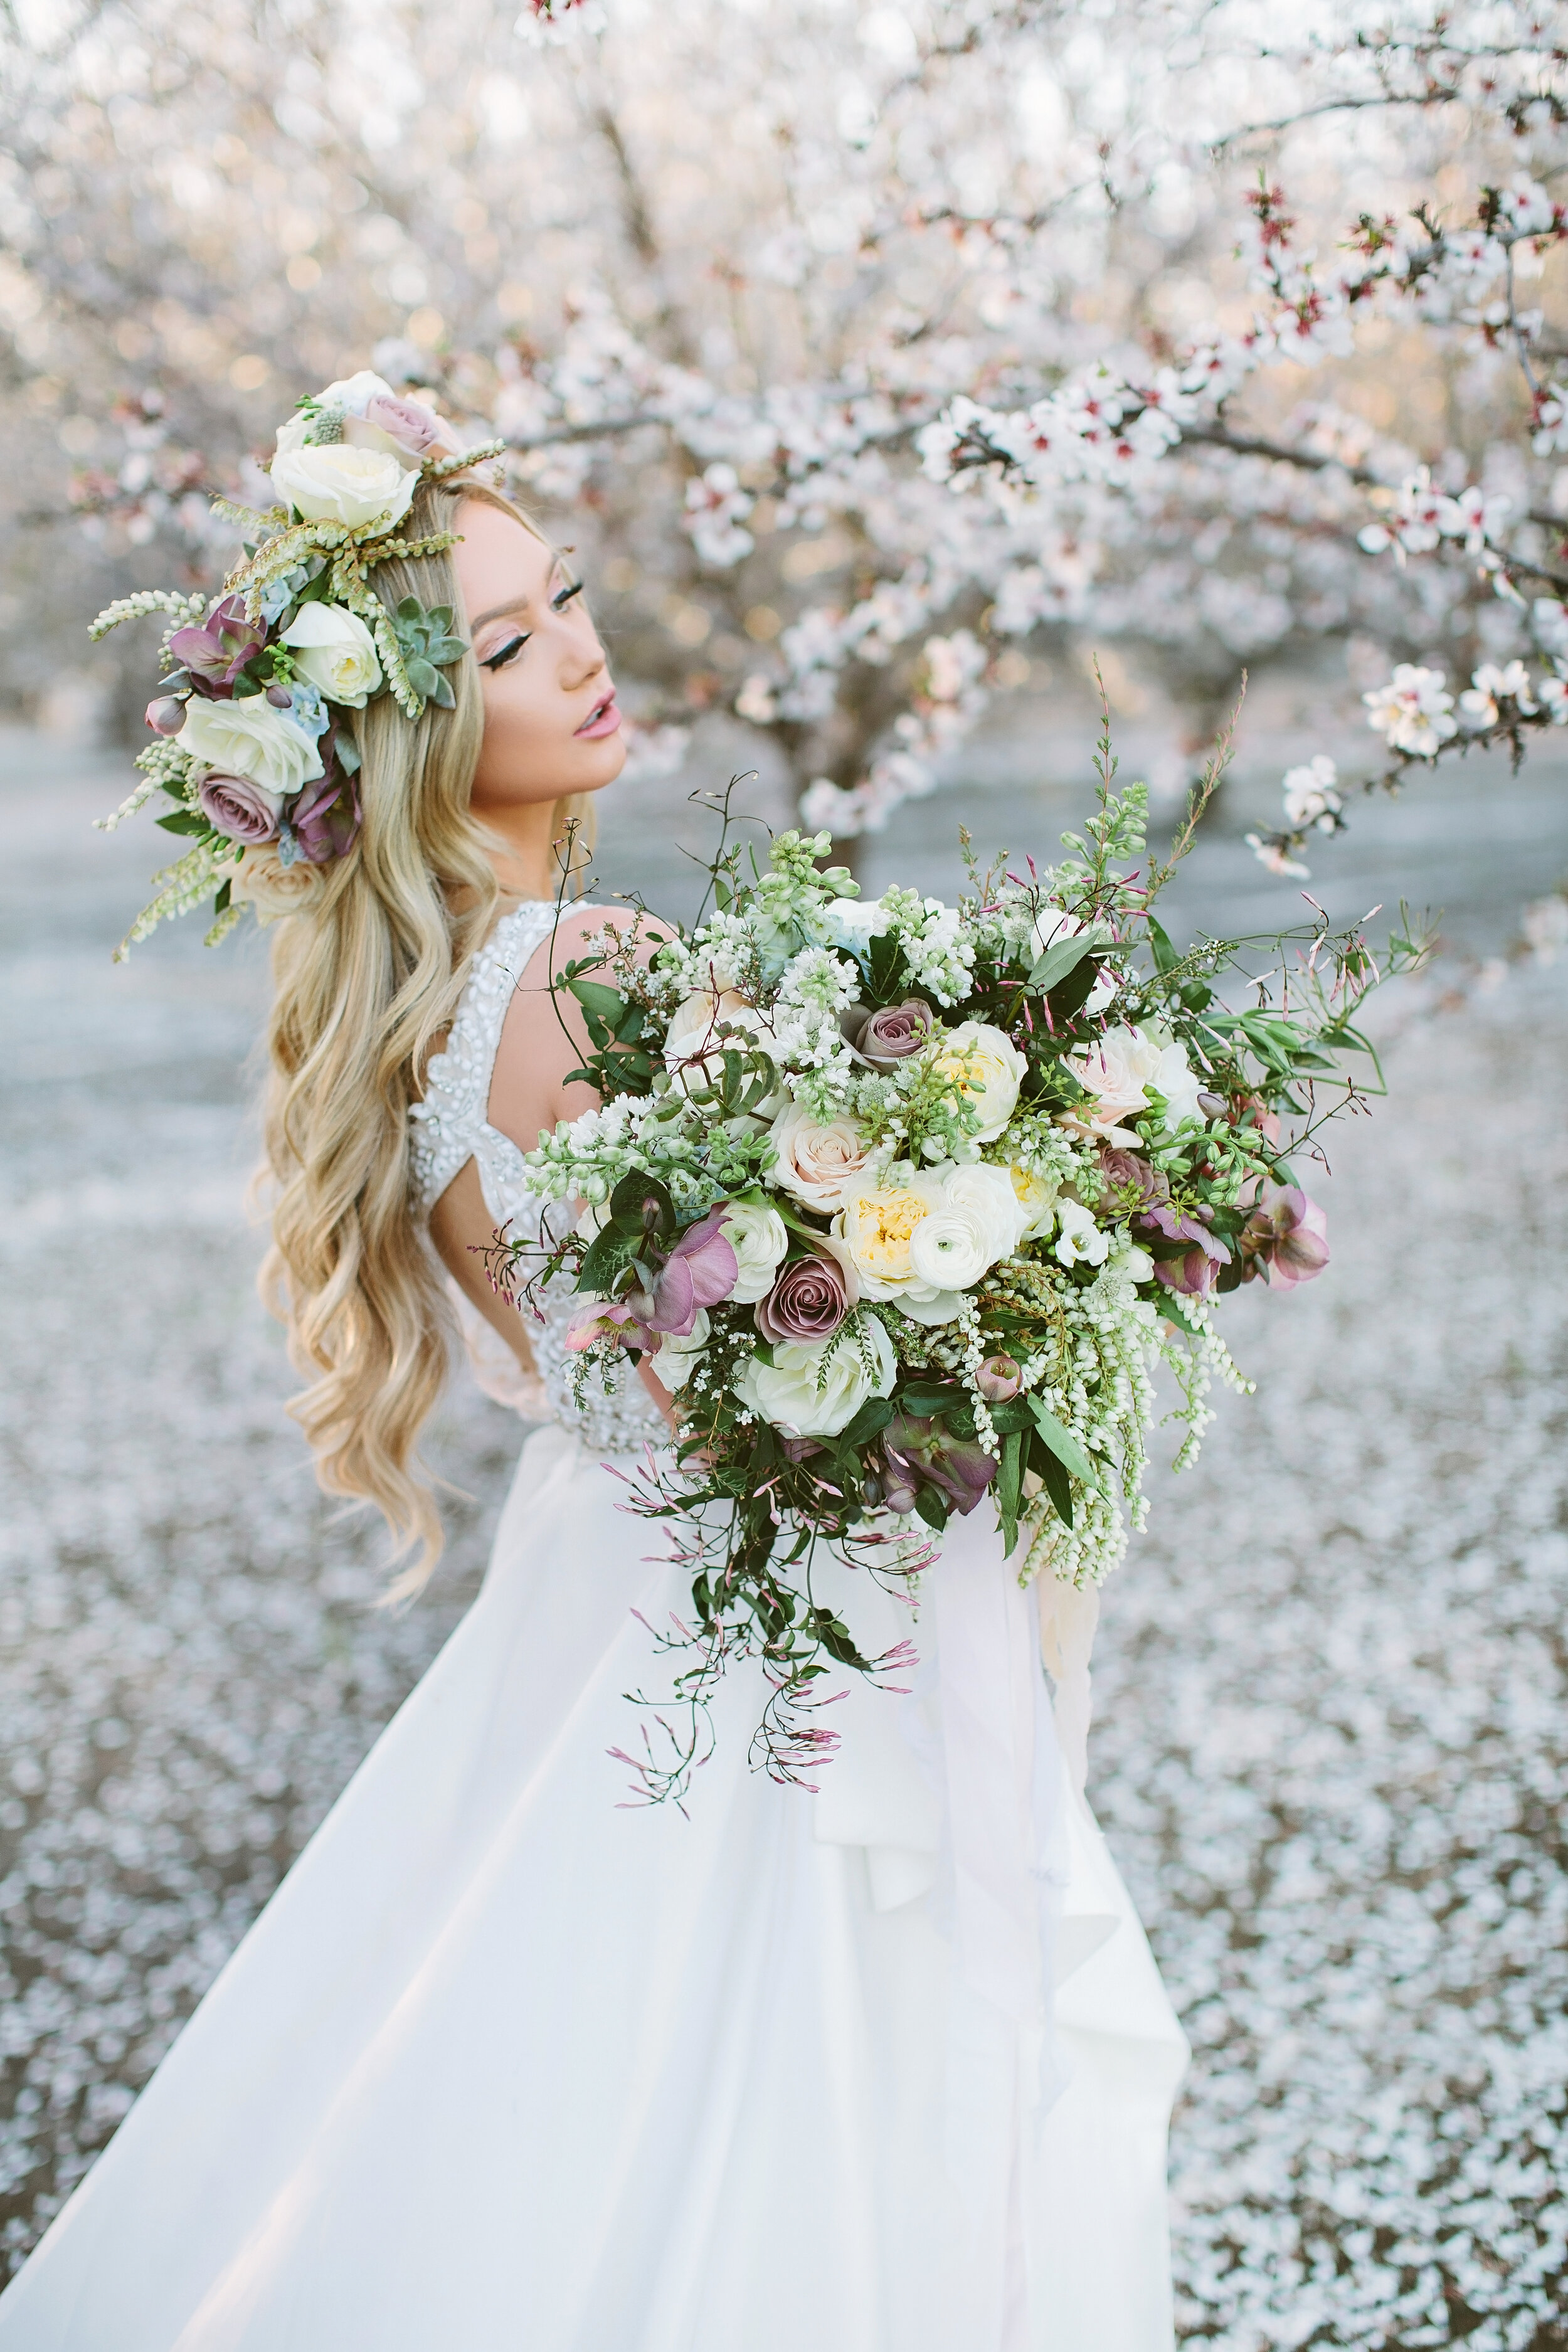 Violette-fleurs-event-design-florist-roseville-anna-perevertaylo-photography-planner-blooming-tree-bride-bouquet.jpg